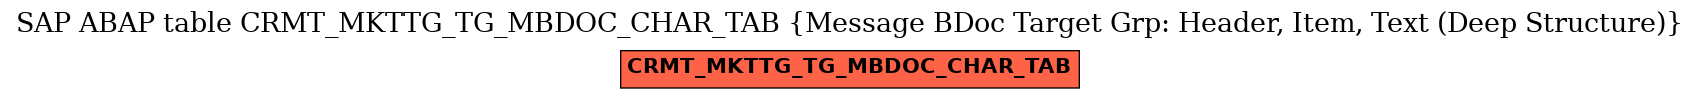 E-R Diagram for table CRMT_MKTTG_TG_MBDOC_CHAR_TAB (Message BDoc Target Grp: Header, Item, Text (Deep Structure))